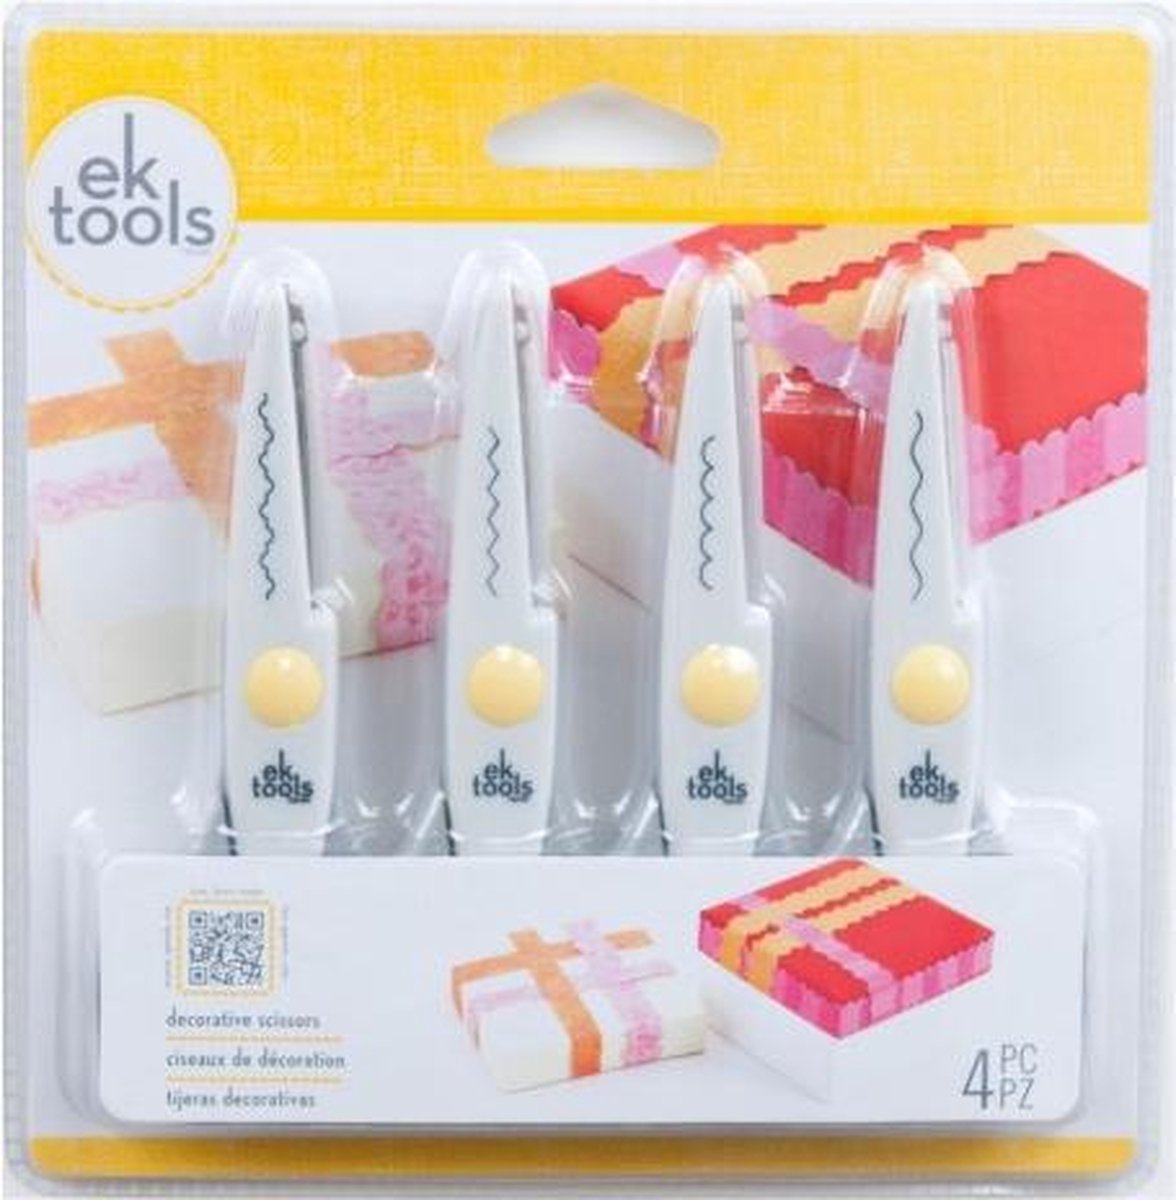 EK tools decorative scissor x4